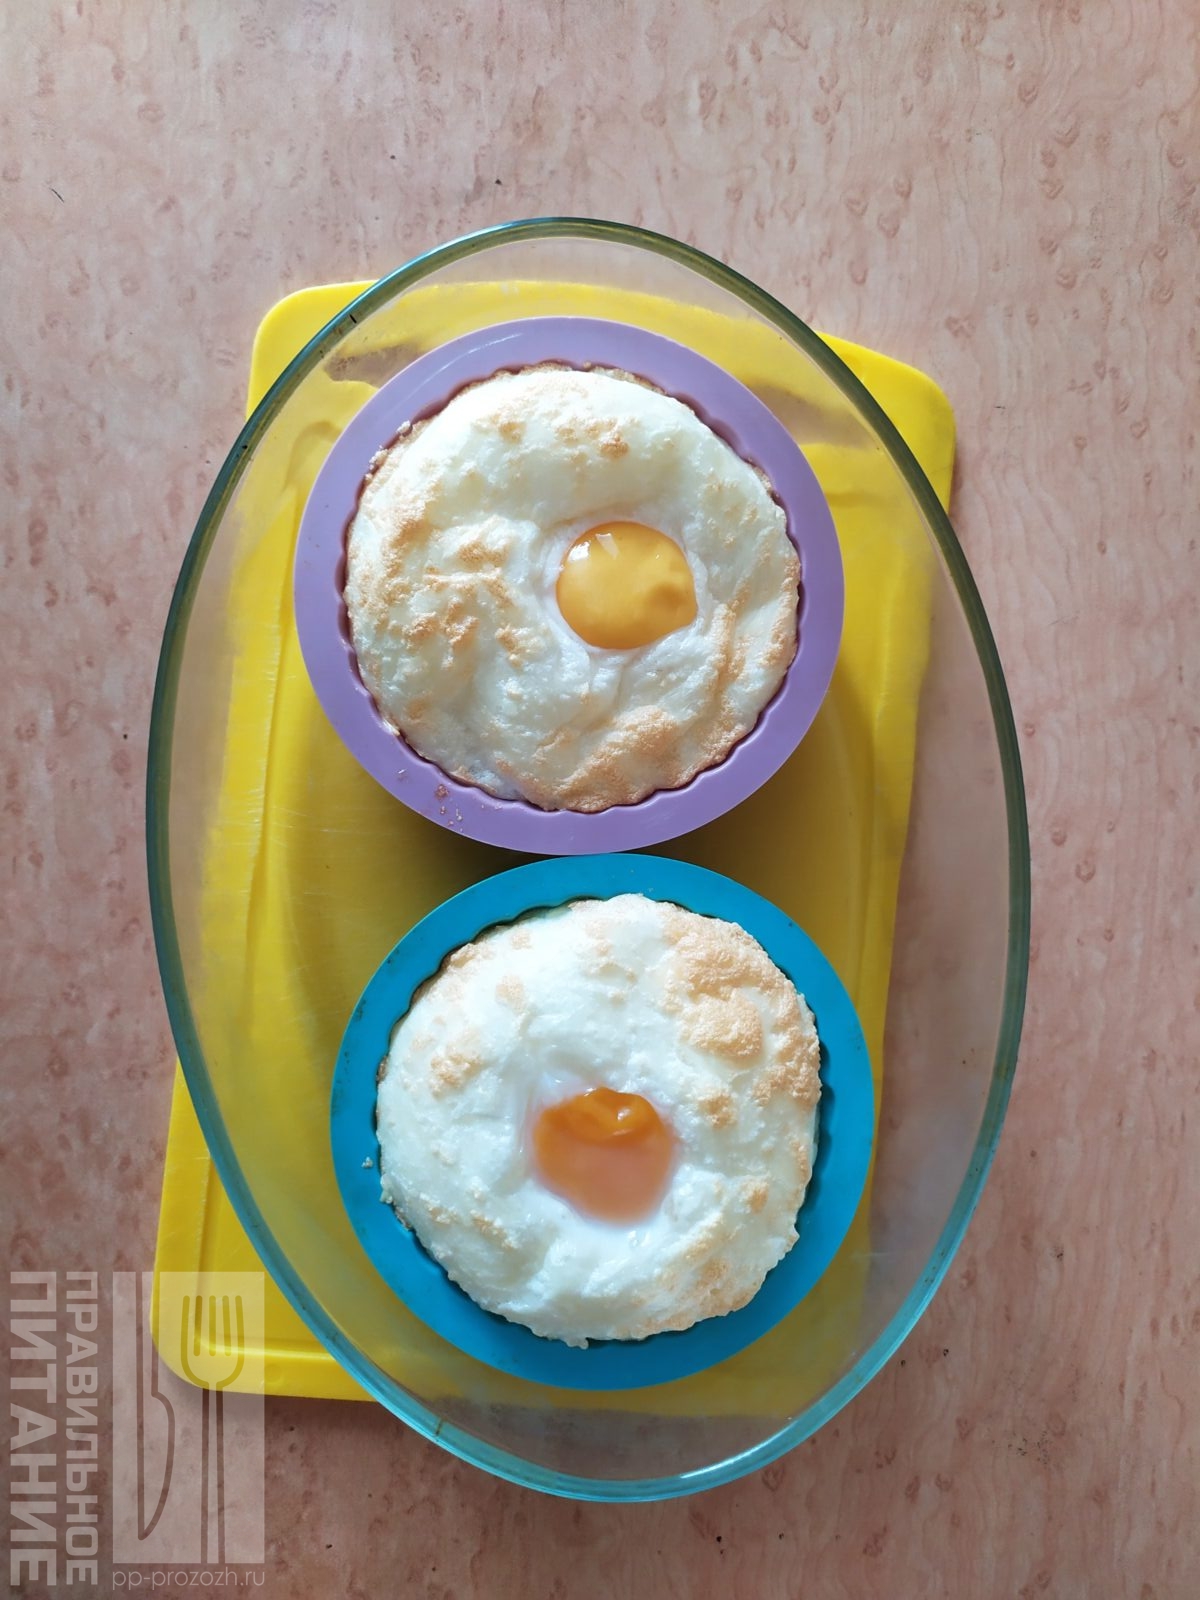 50 рецептов из яиц - Завтрак от Гранд кулинара